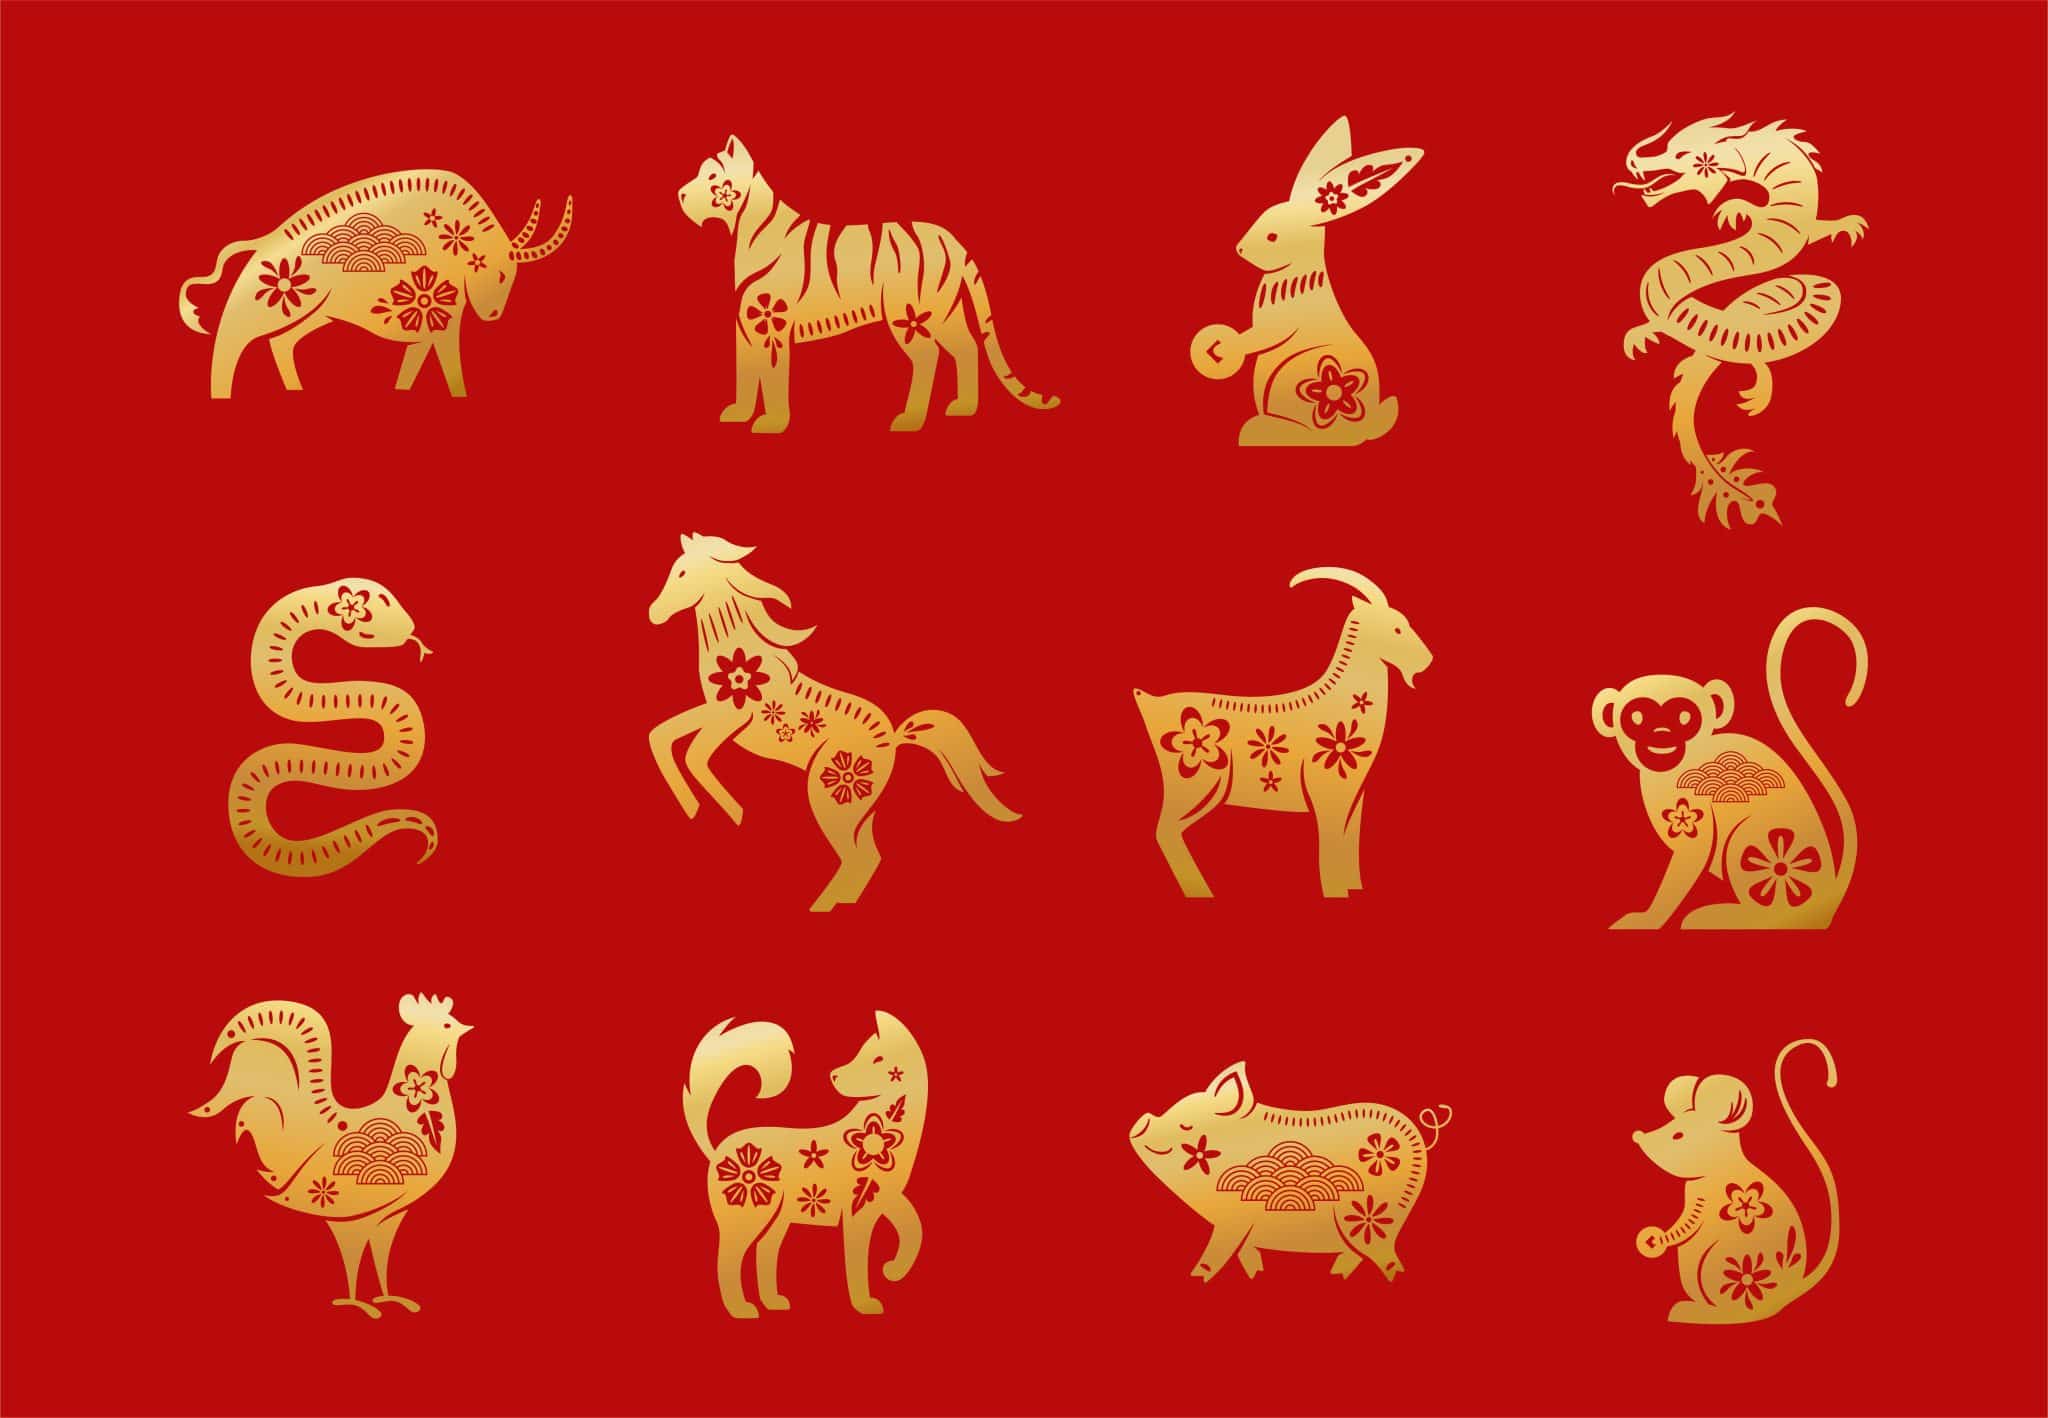 Kineski horoskop. Dvanaest zlatnih likova za azijsku Novu godinu, izolovani na crvenoj pozadini. Vektorska ilustracija simbola horoskopa iz astrološkog kalendara.